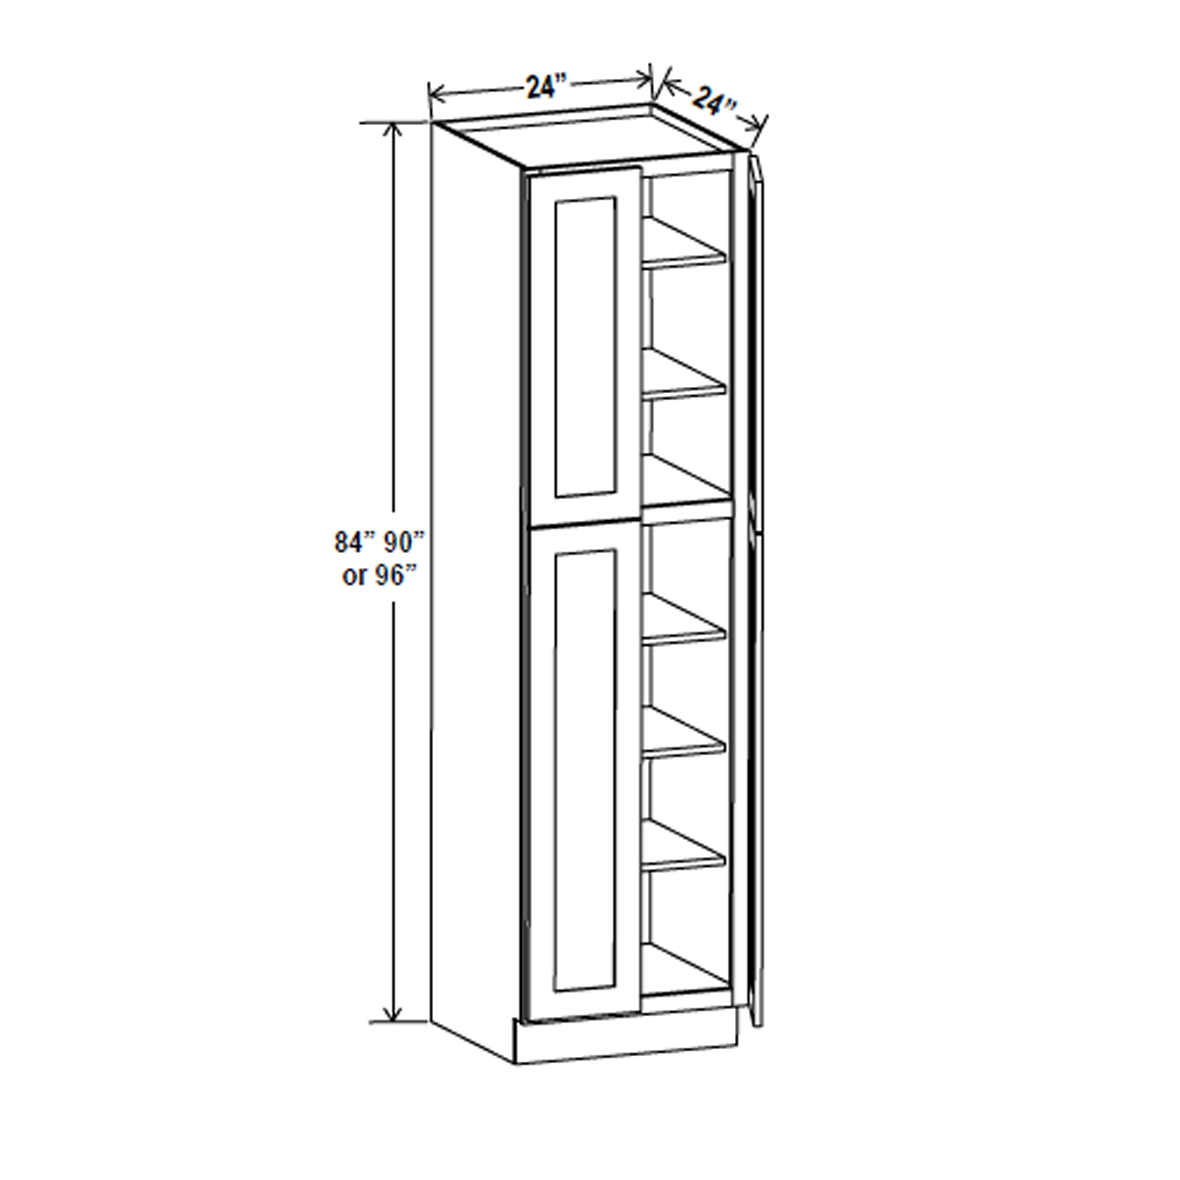 Wall Pantry Cabinet - 24W x 90H x 24D - Aspen Charcoal Grey - RTA